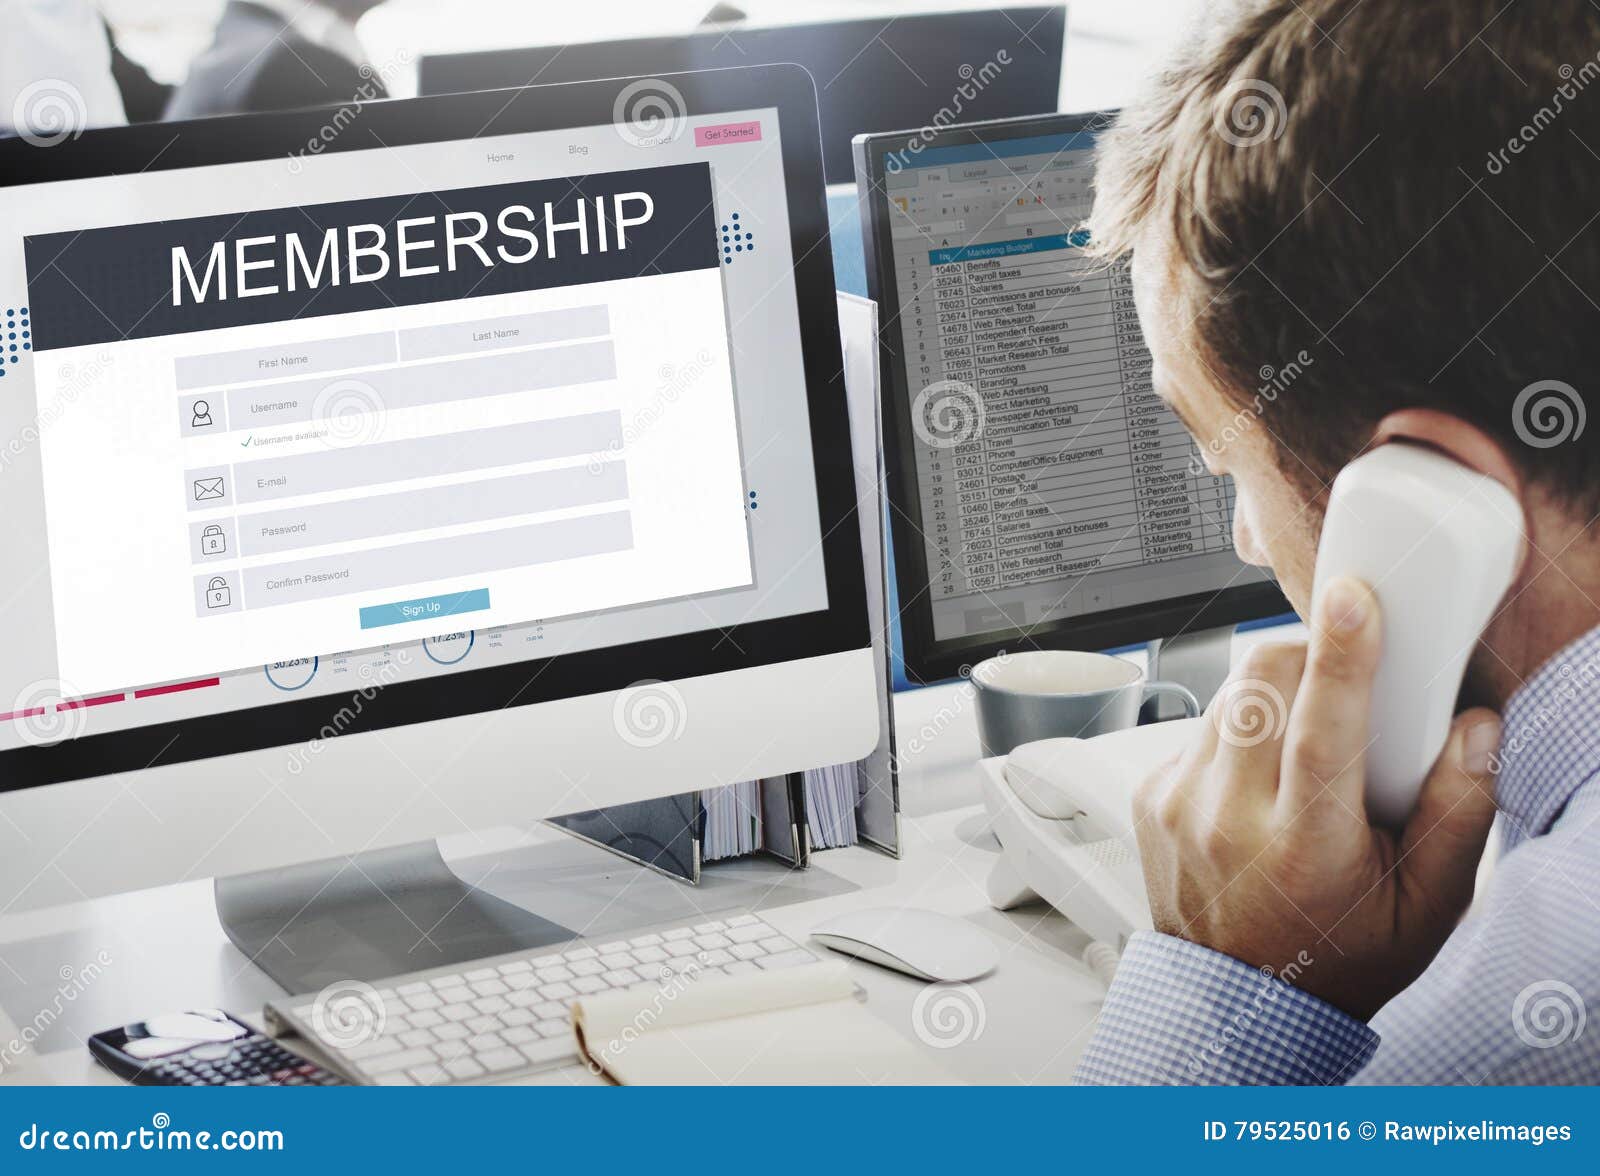 membership registration follow concept